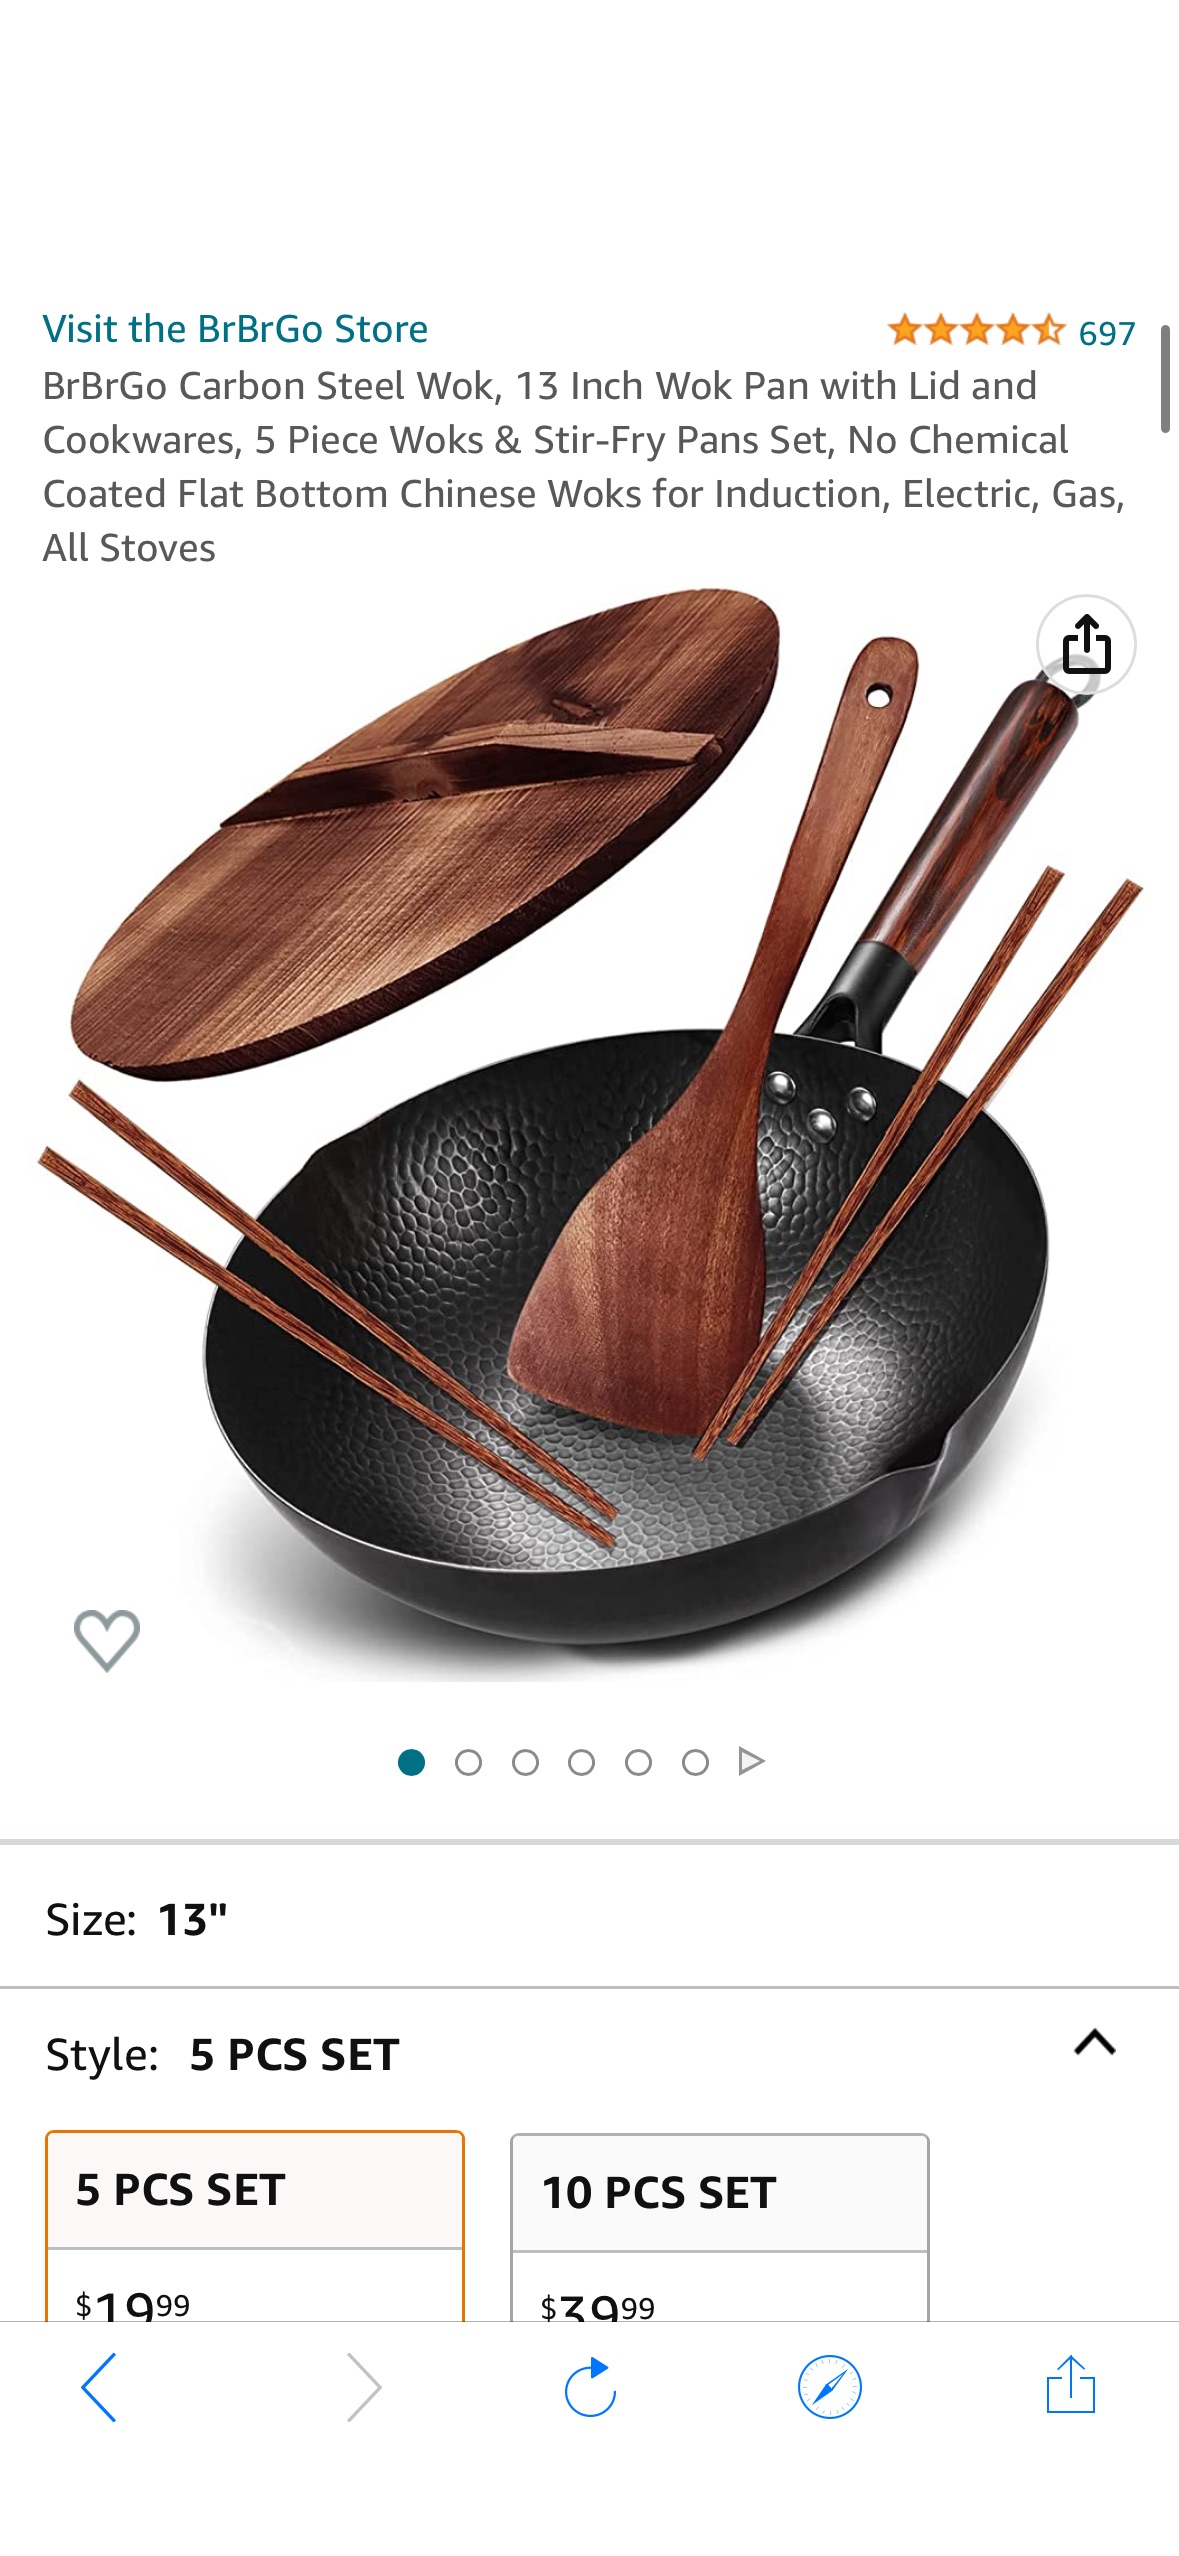 Amazon.com: BrBrGo Carbon Steel Wok, 13 Inch Wok Pan with Lid and Cookwares, 5 Piece Woks & Stir-Fry Pans Set炒锅